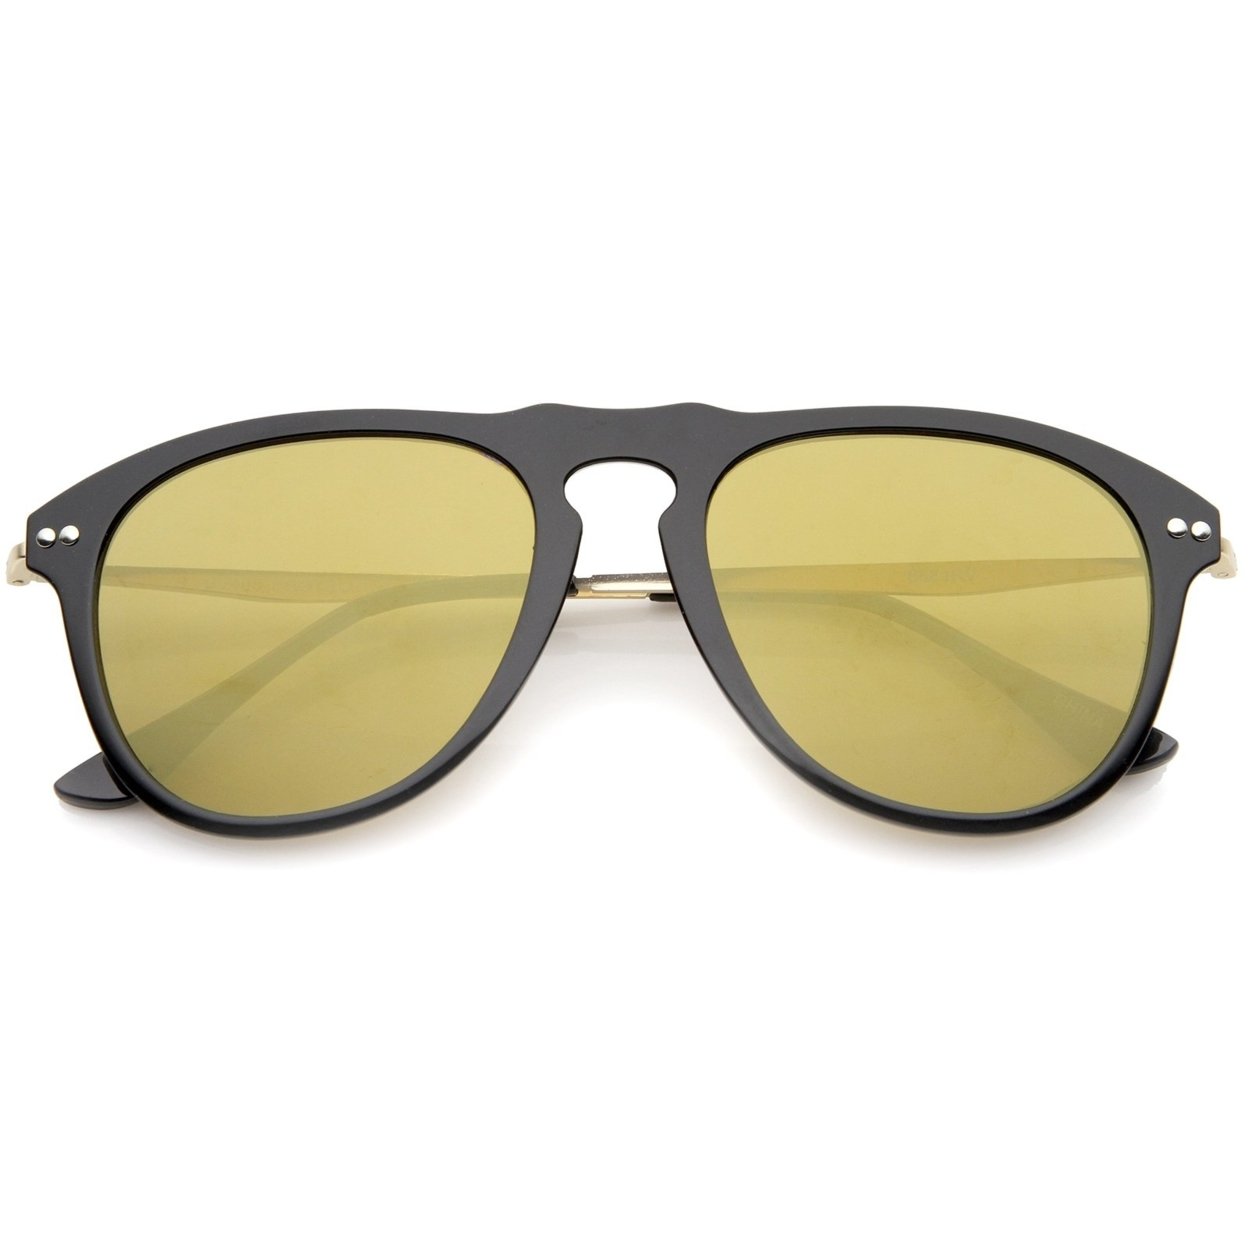 Modern Keyhole Bridge Horn Rimmed Colored Mirror Lens Aviator Sunglasses 53mm - Black-Gold / Orange Mirror